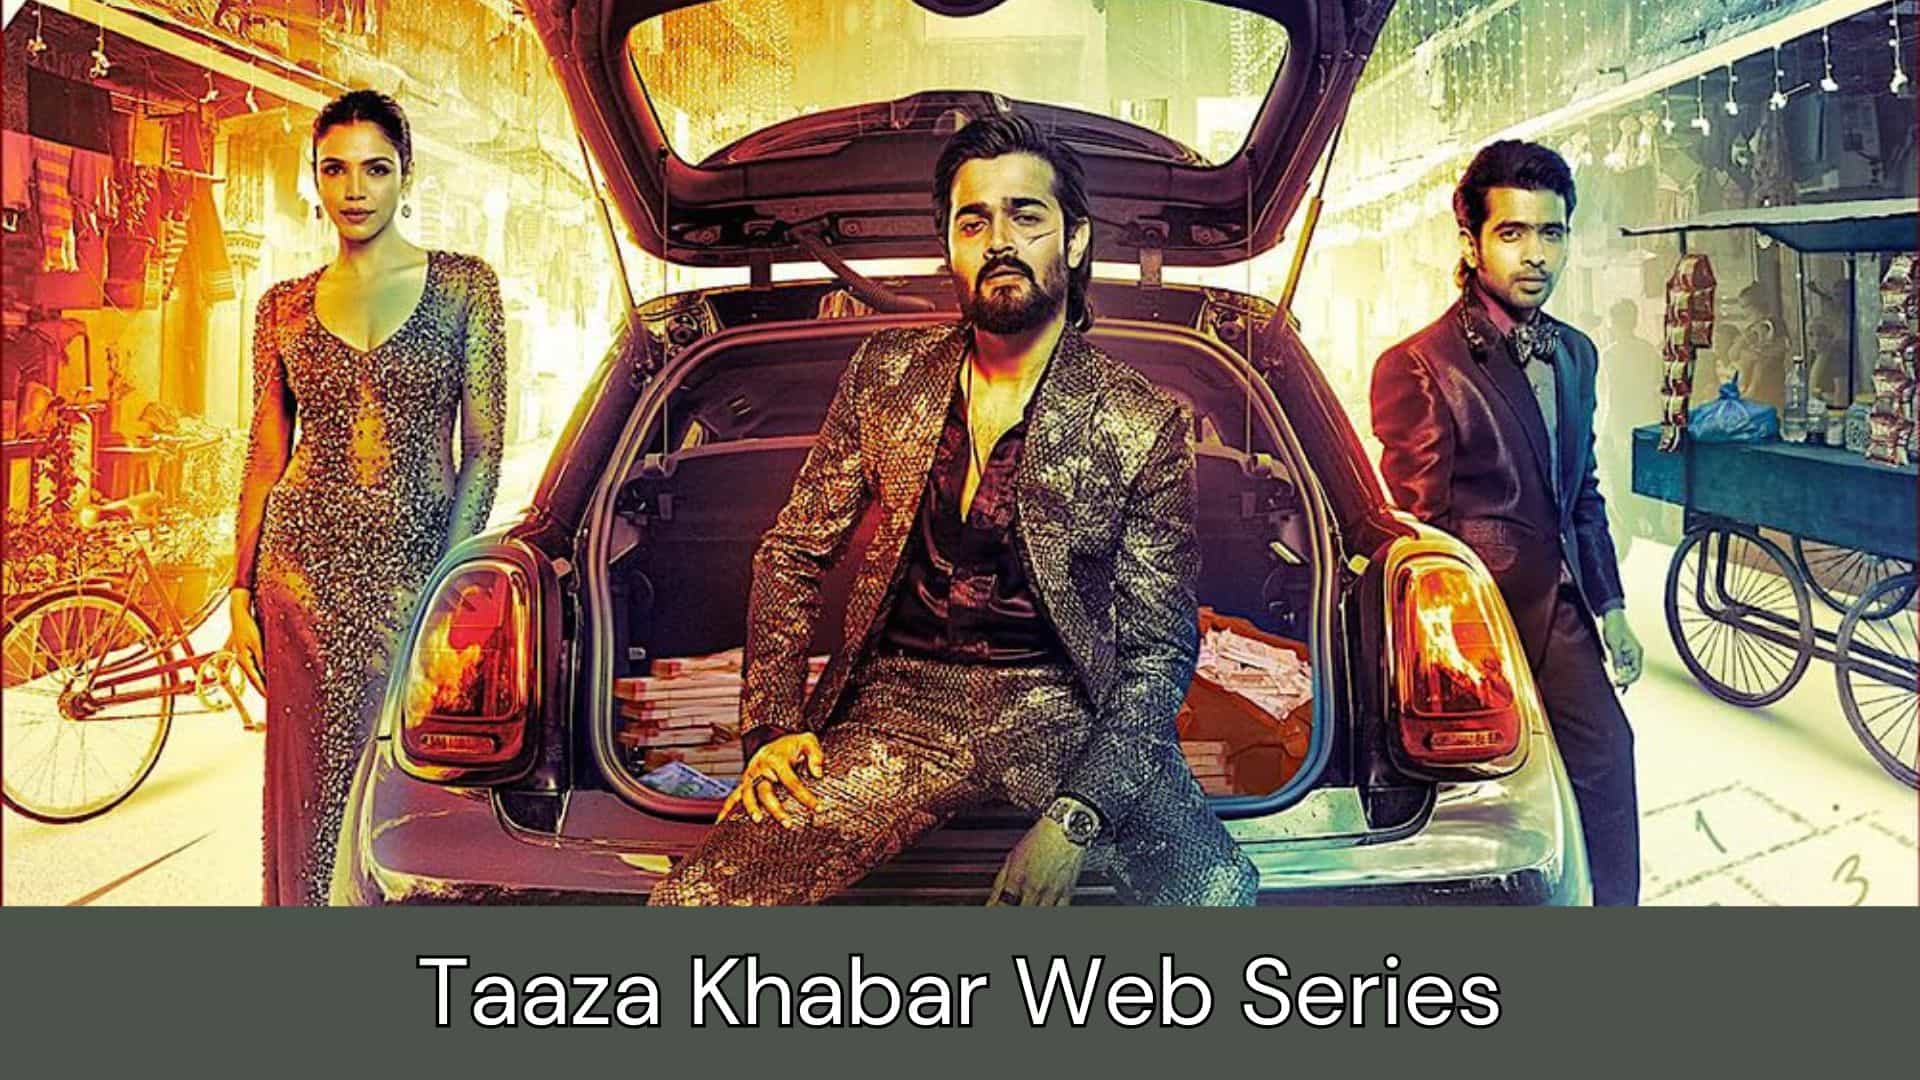 Taaza Khabar Web Series Watch Online, Total Episode, Budget, Cast